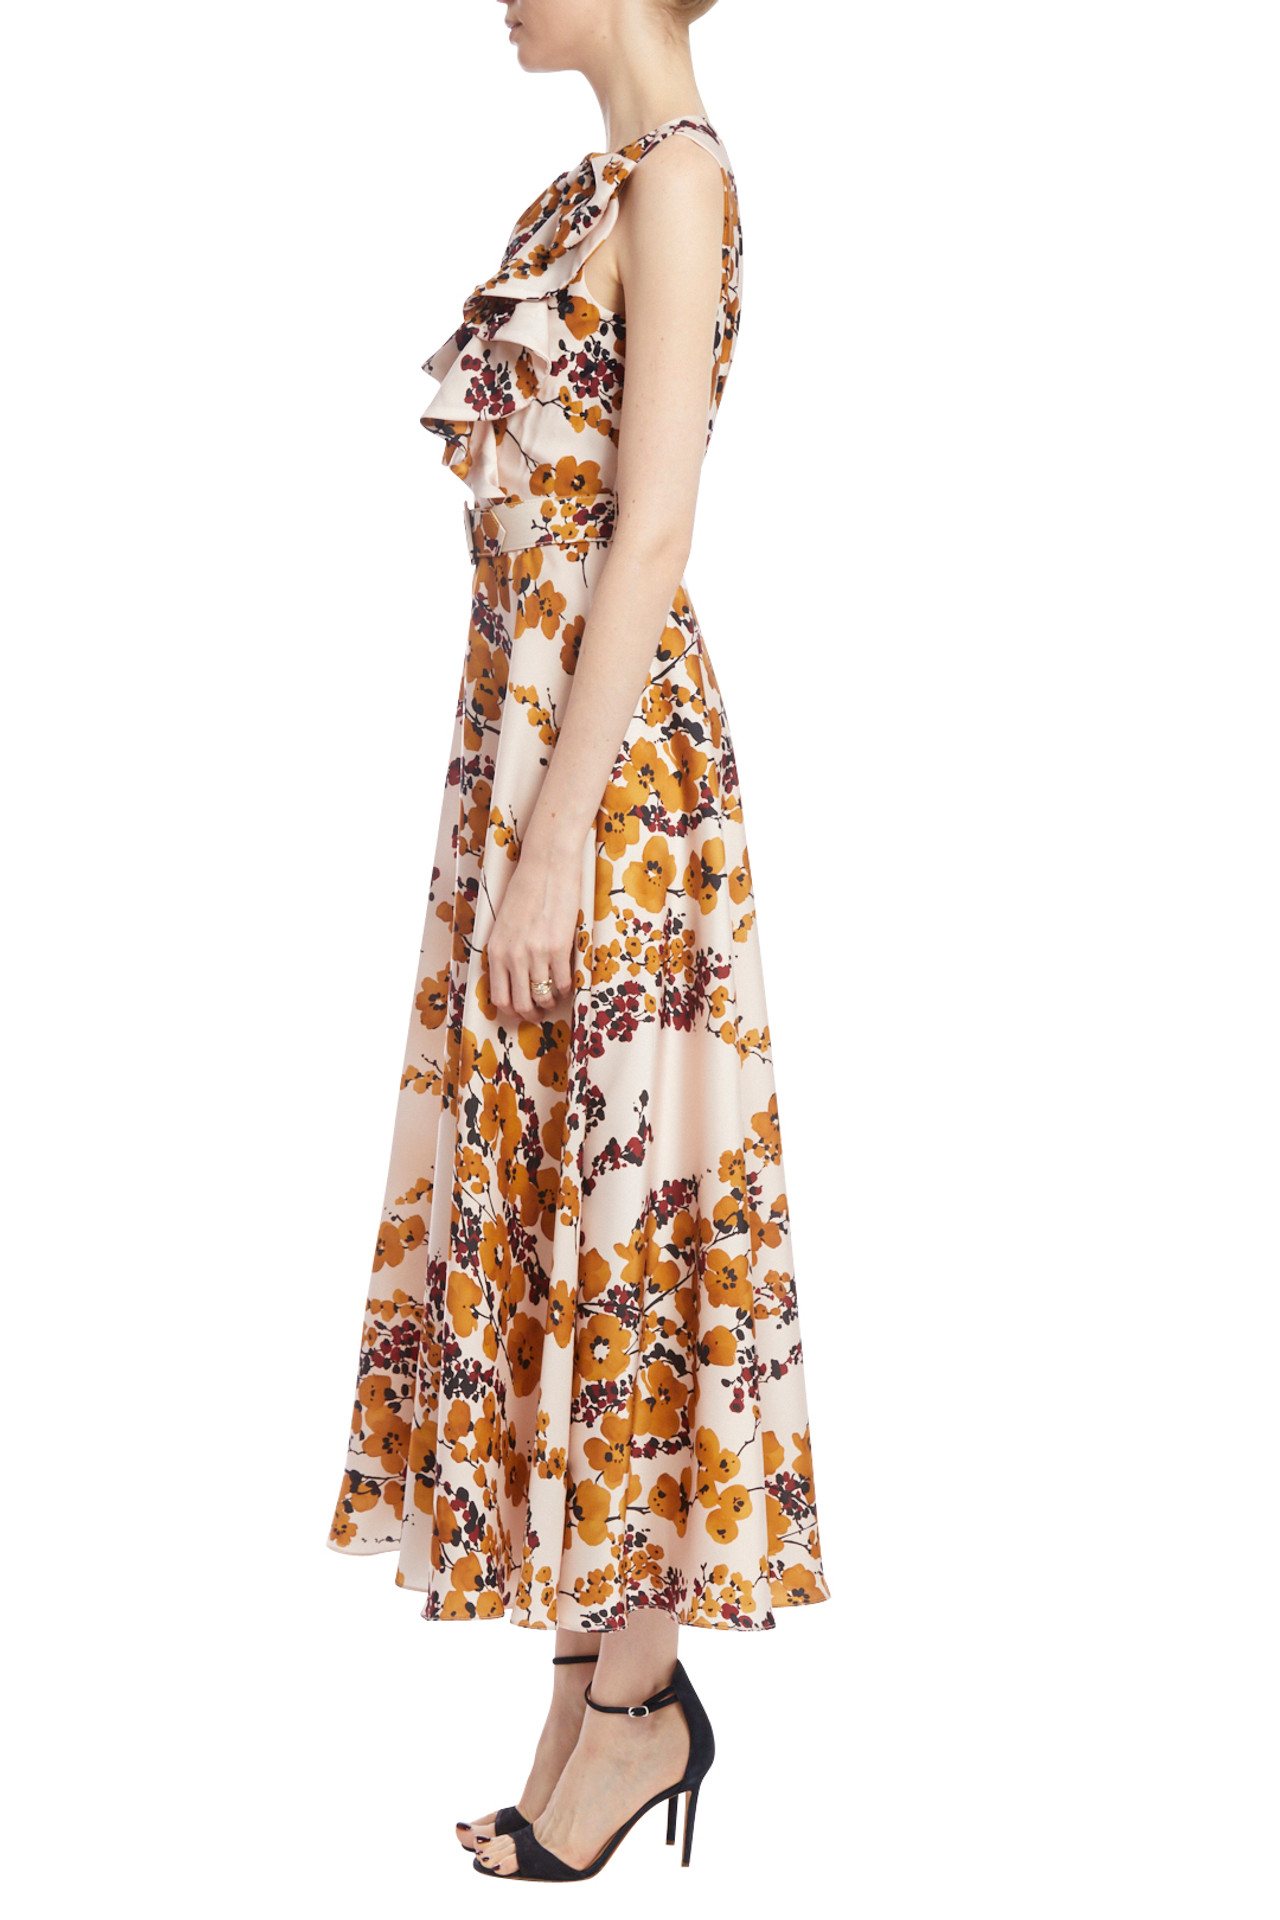 Eastern-Inspired Floral Sleeveless Dress by Badgley Mischka